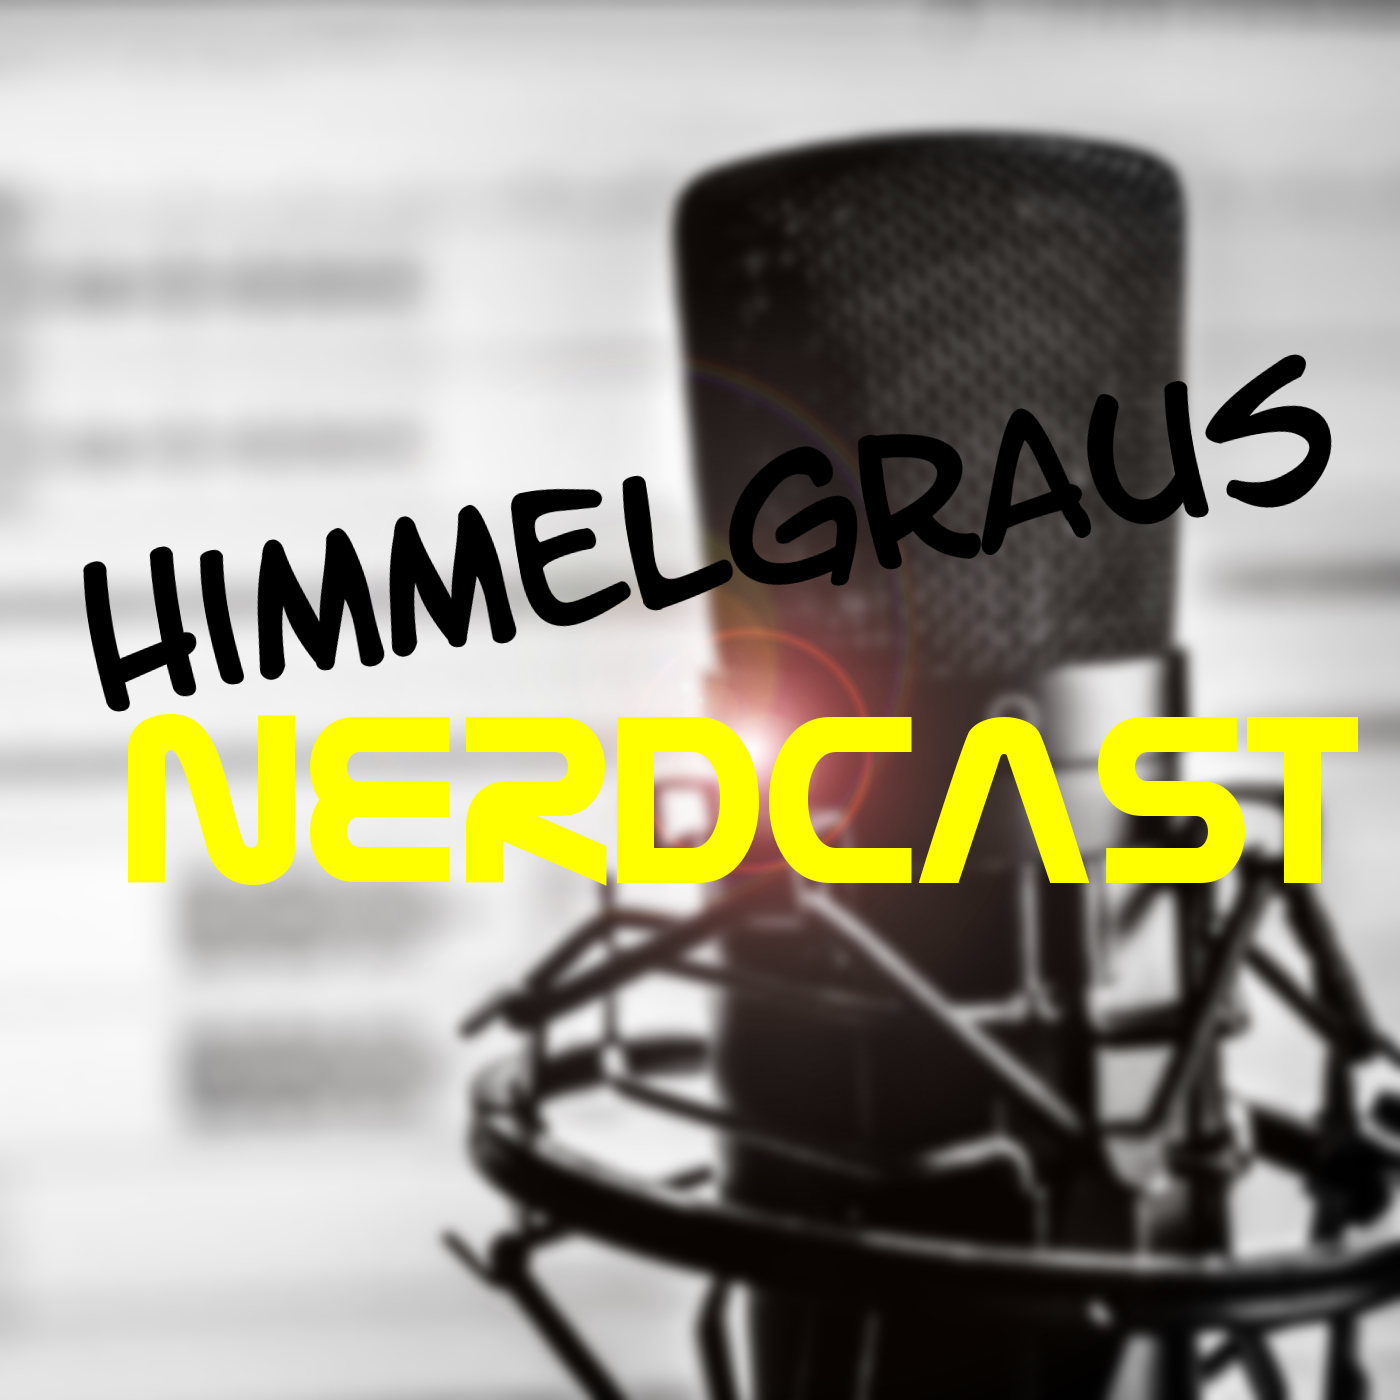 Himmelgraus Nerdcast logo